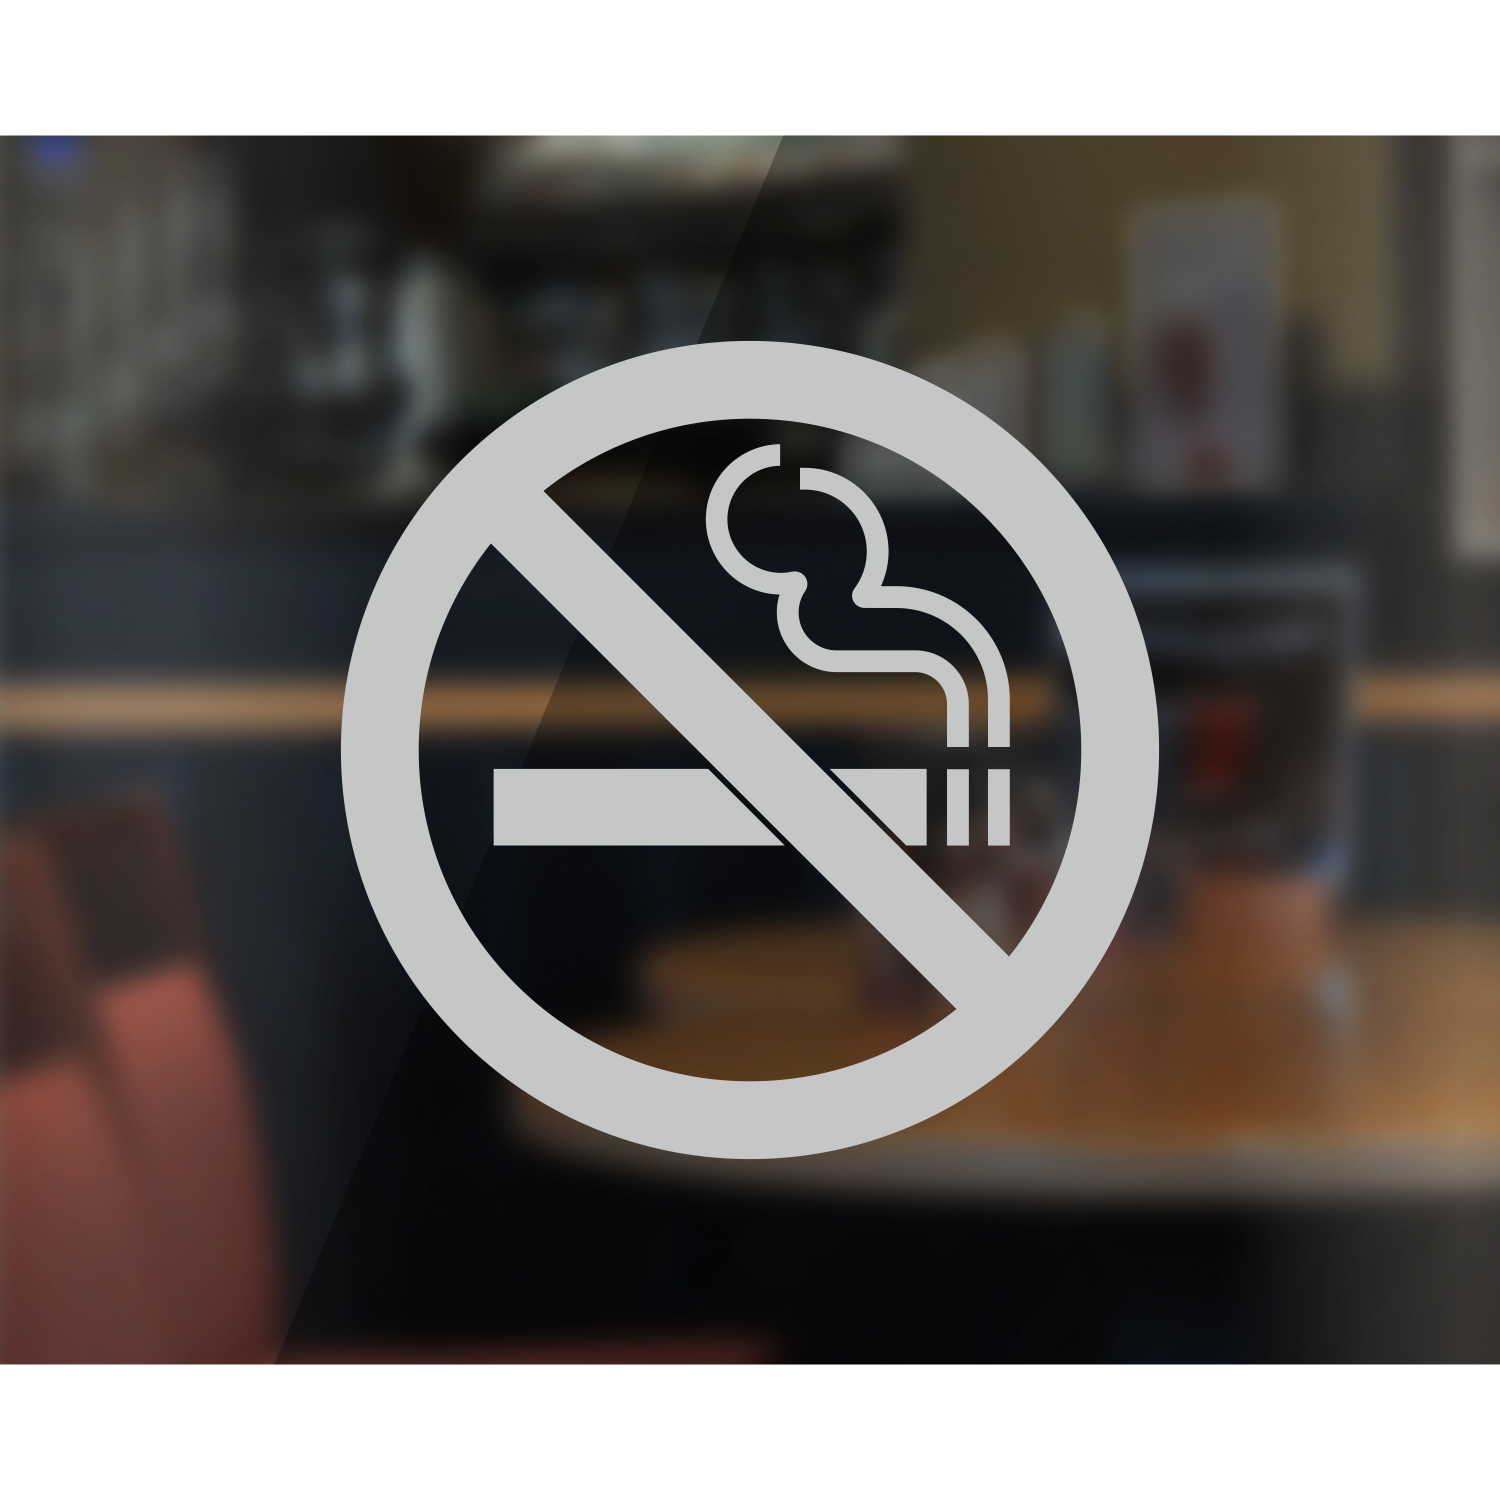 stop smoking symbol